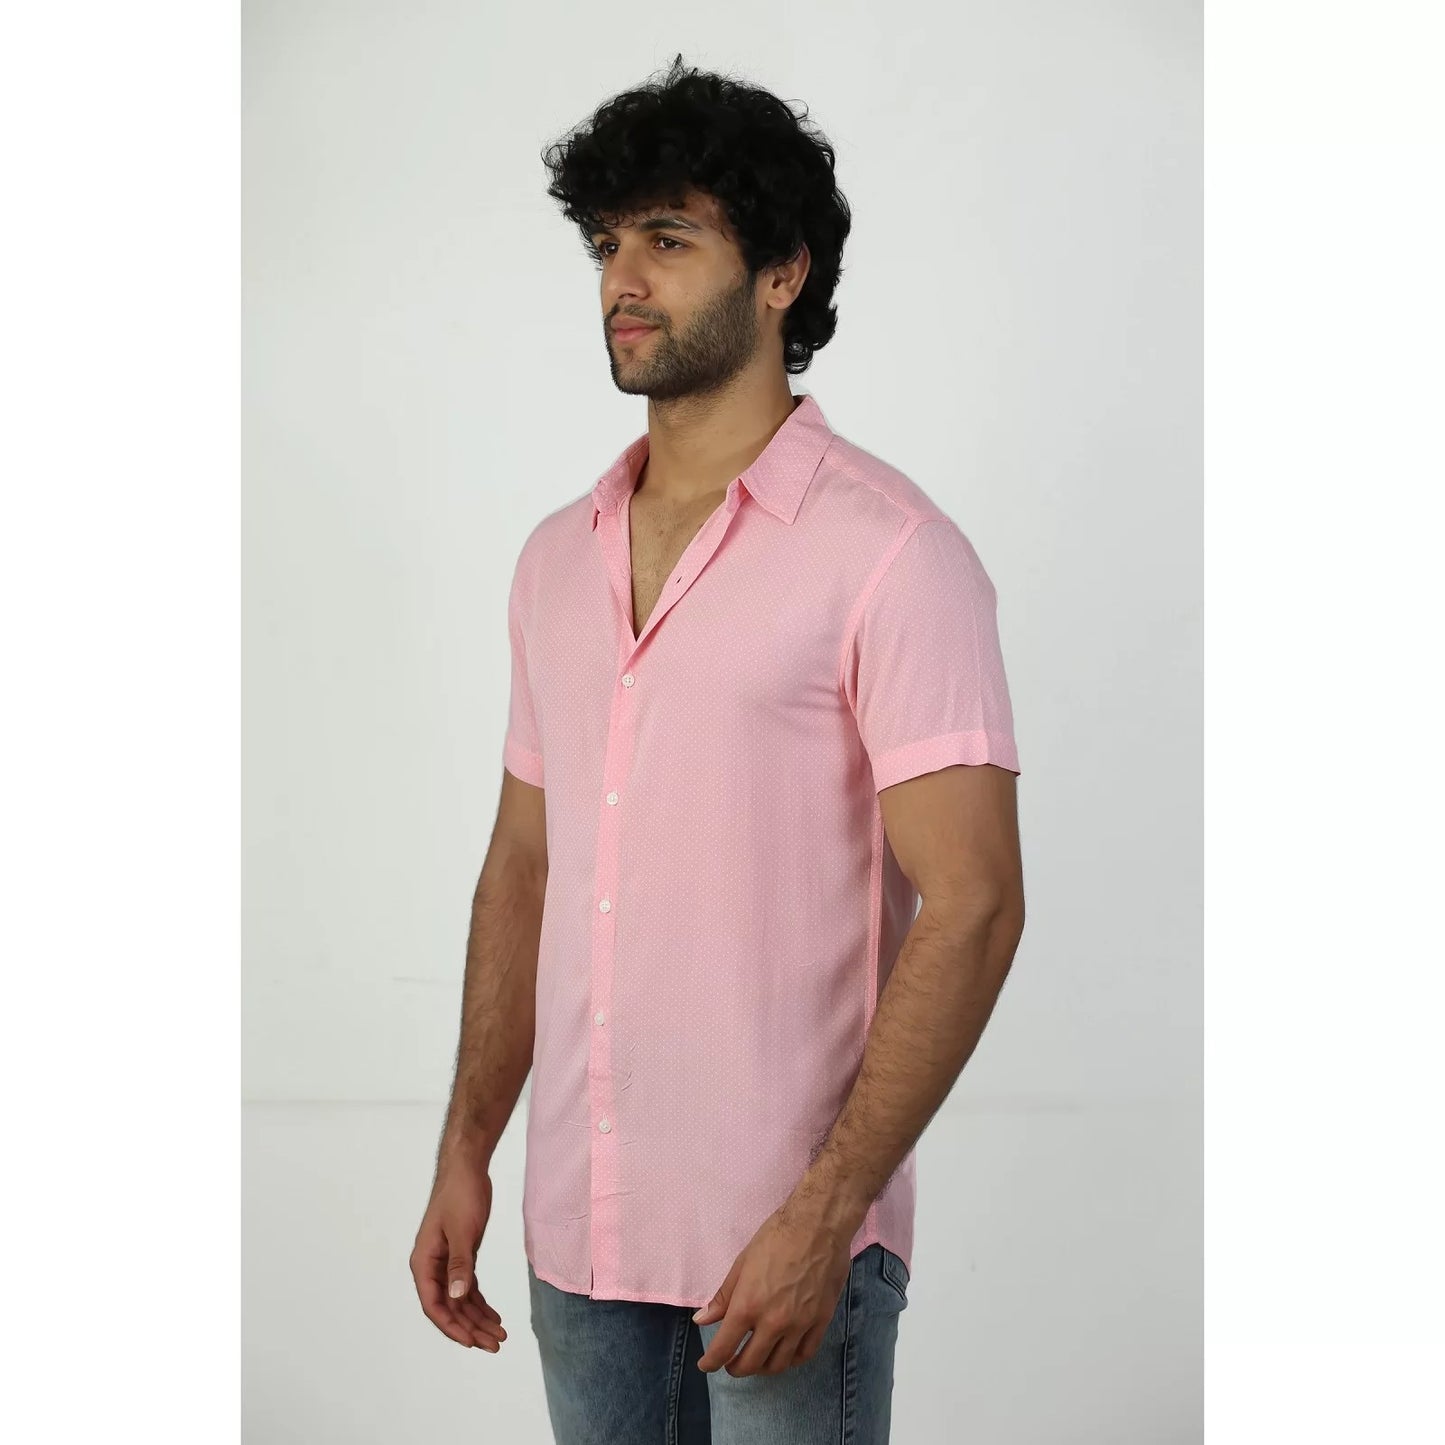 Baby pink passion printed shirt - Polka dotted